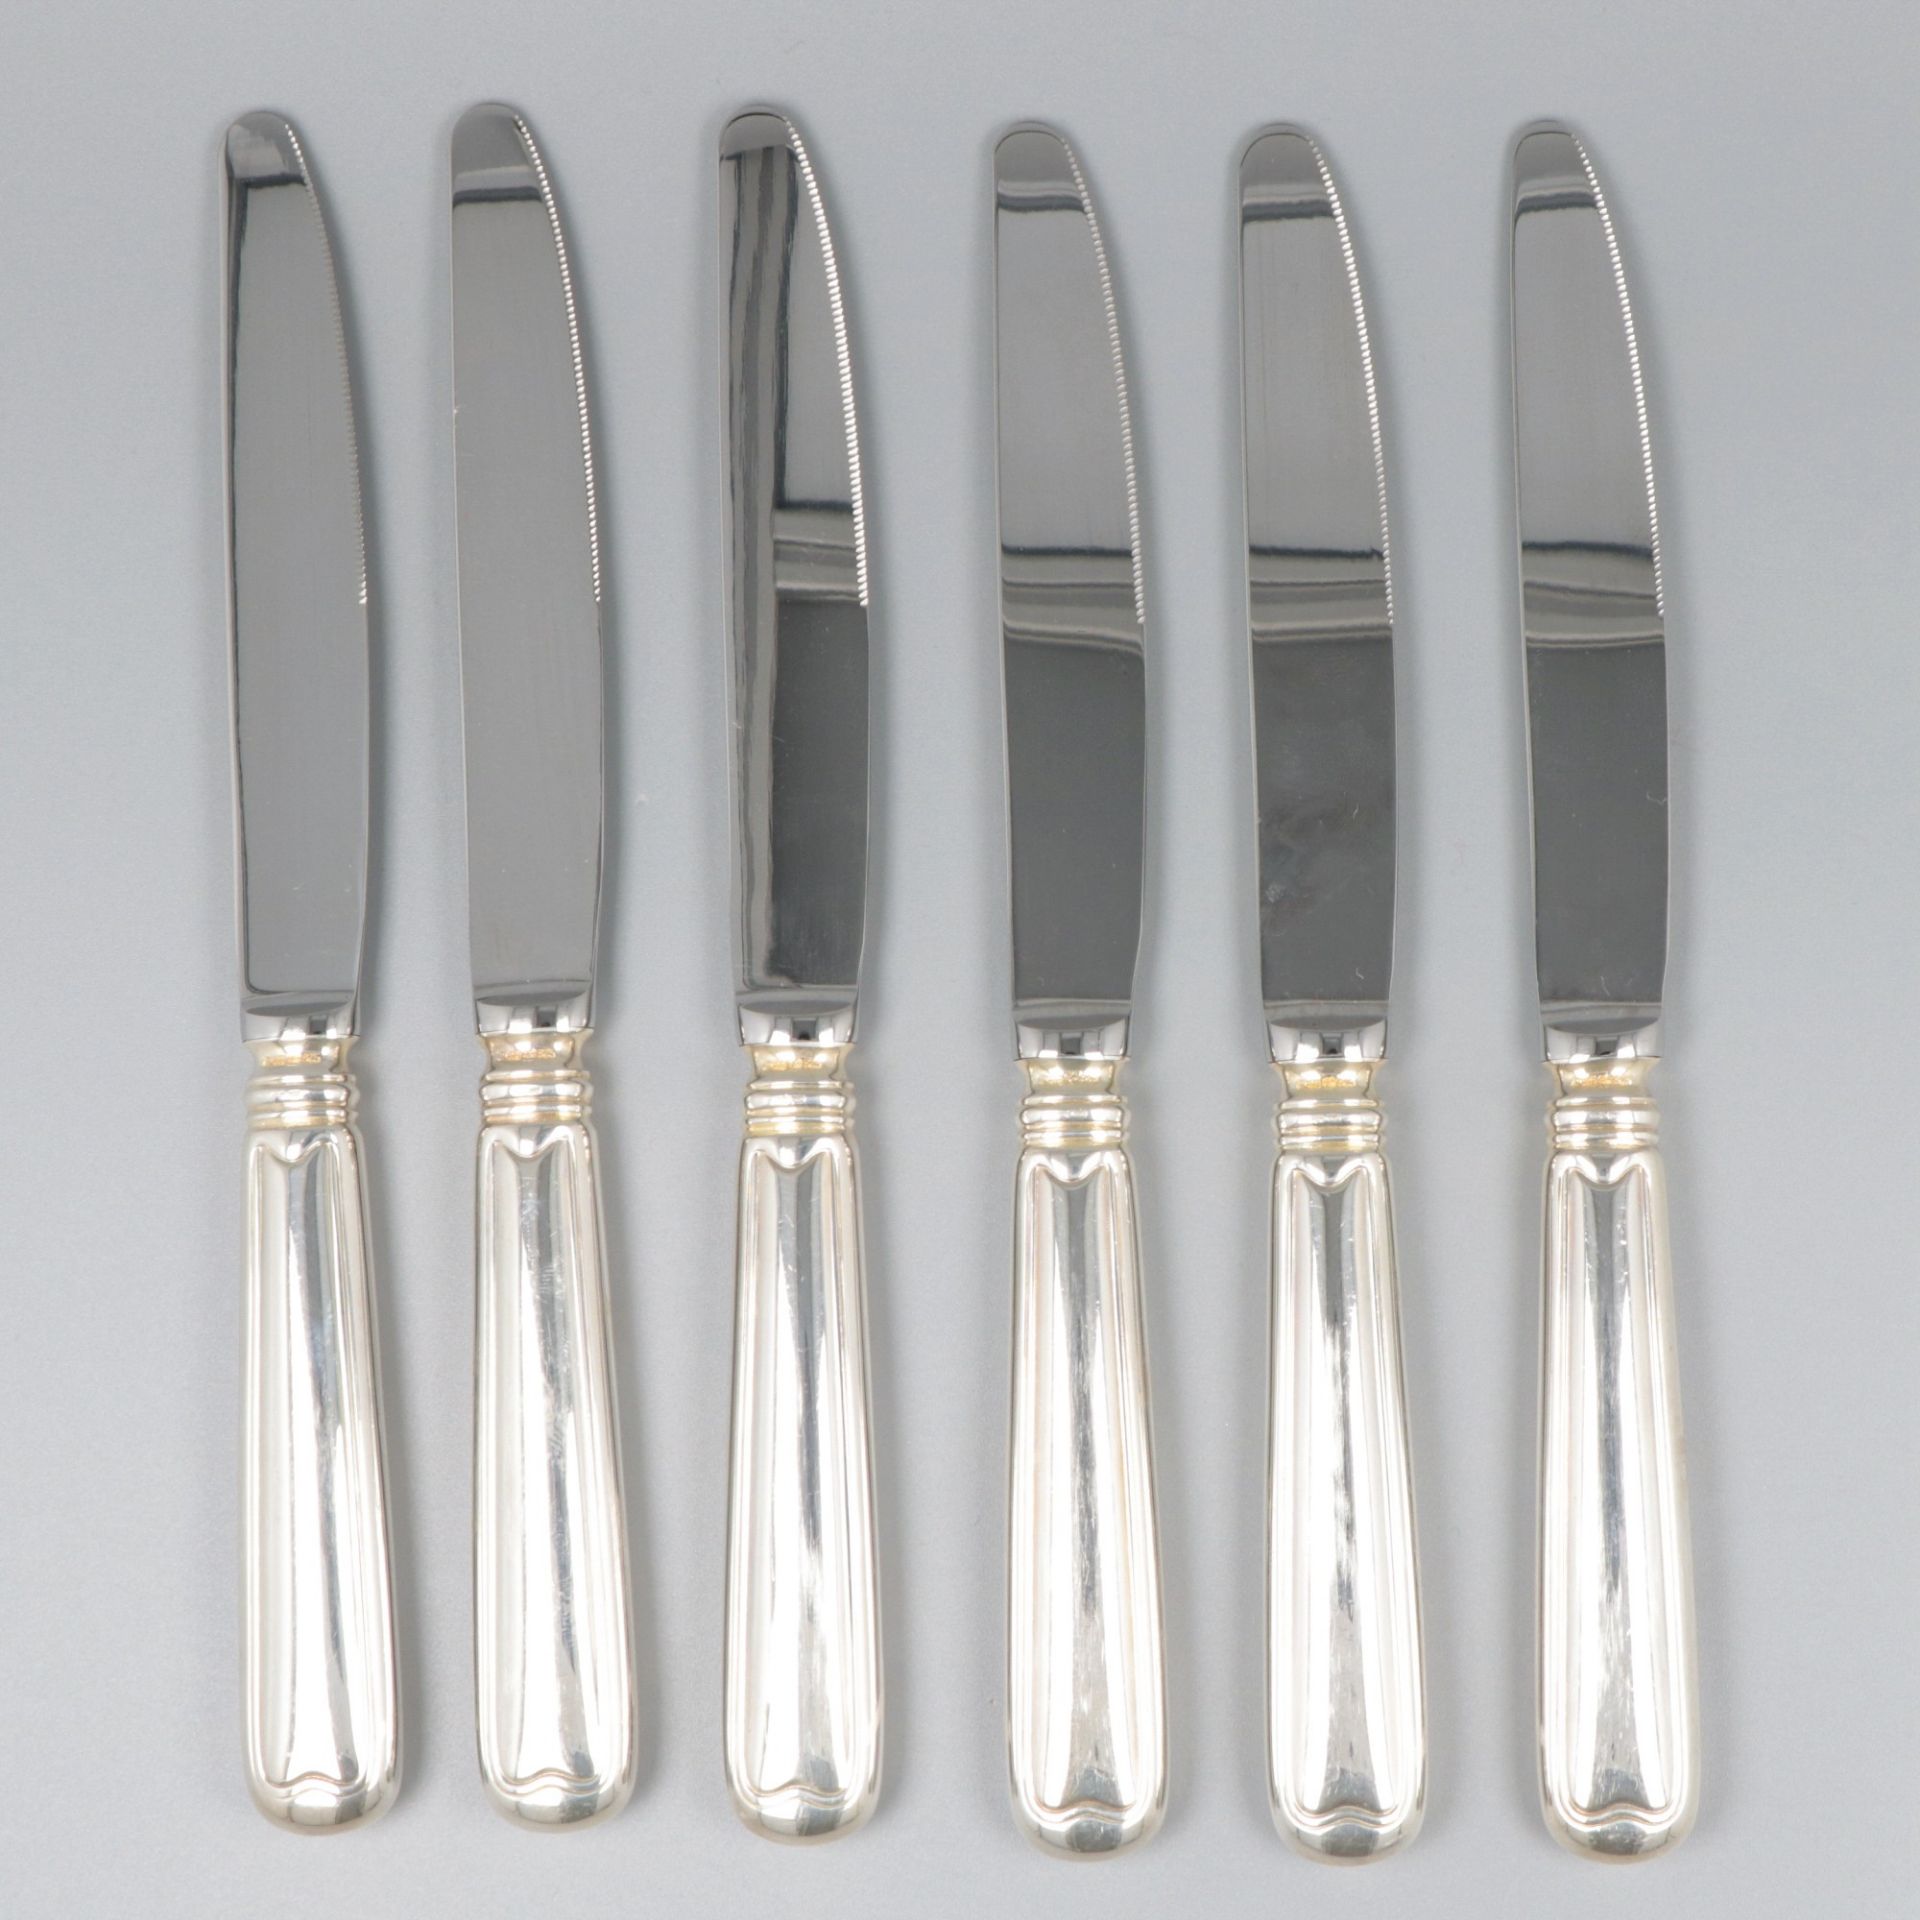 Robbe & Beking 6-piece set dinner knives, model Alt-Faden, silver. - Image 3 of 9